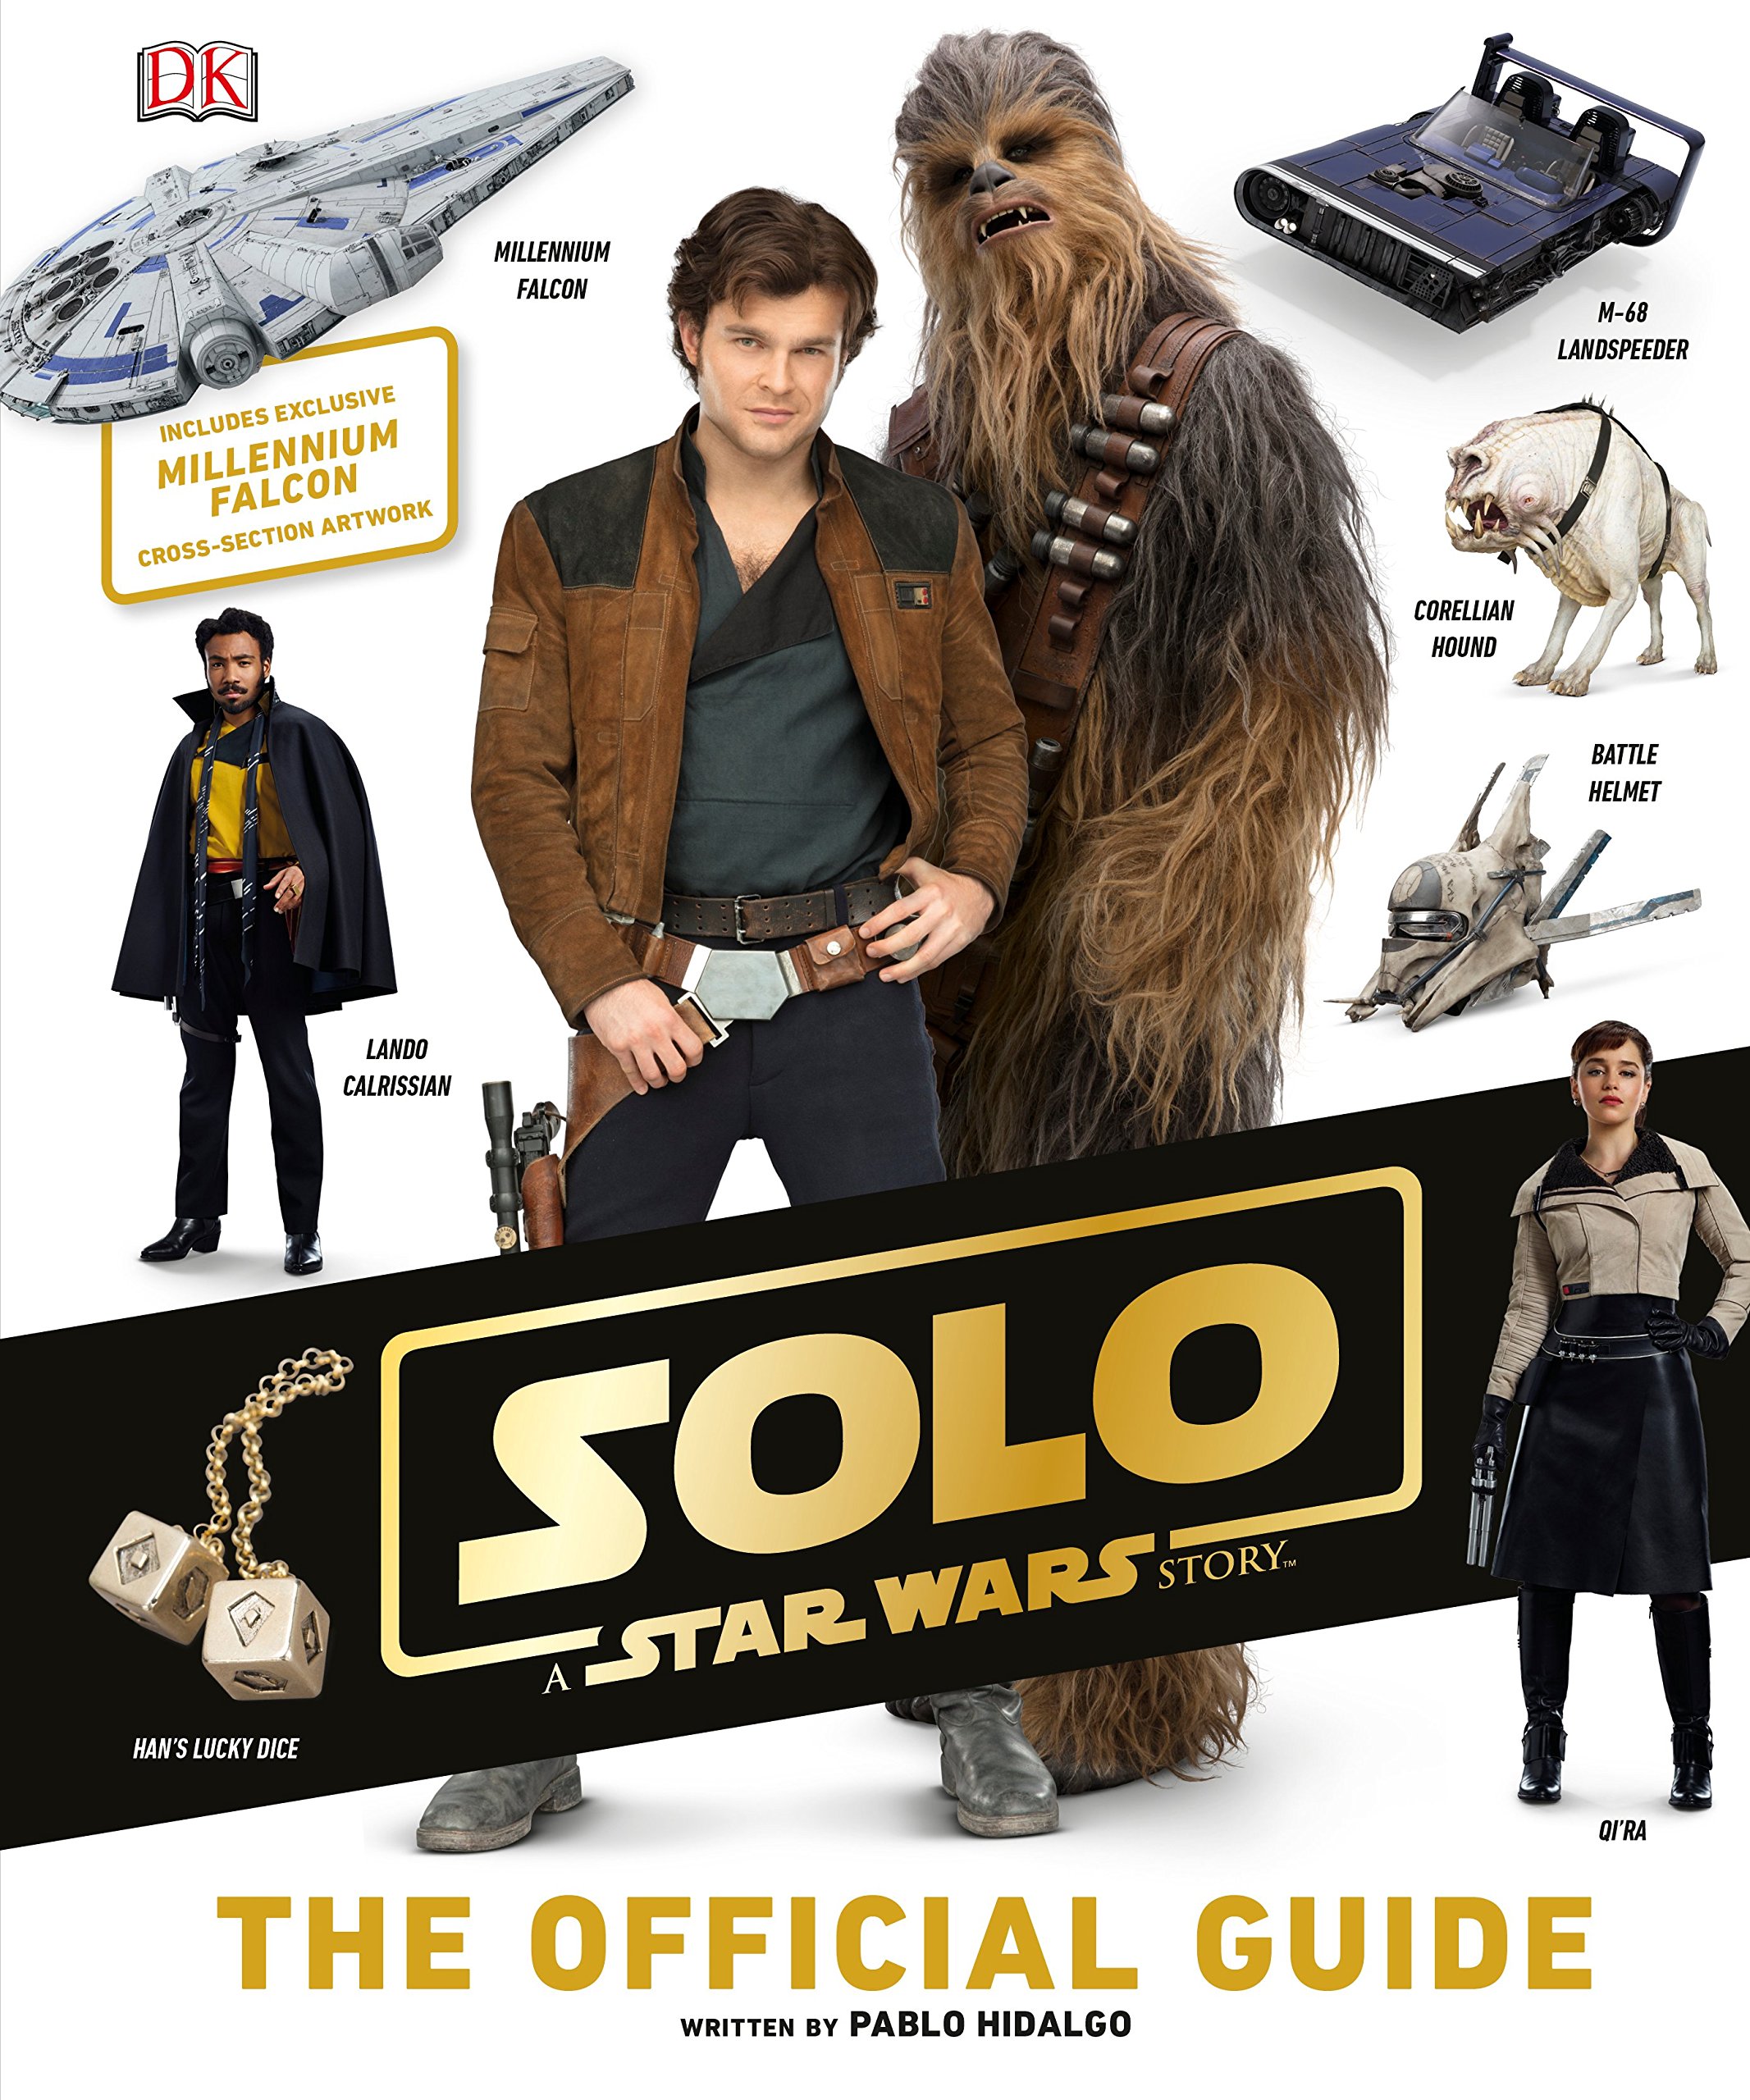 Solo A Star Wars Story.jpg